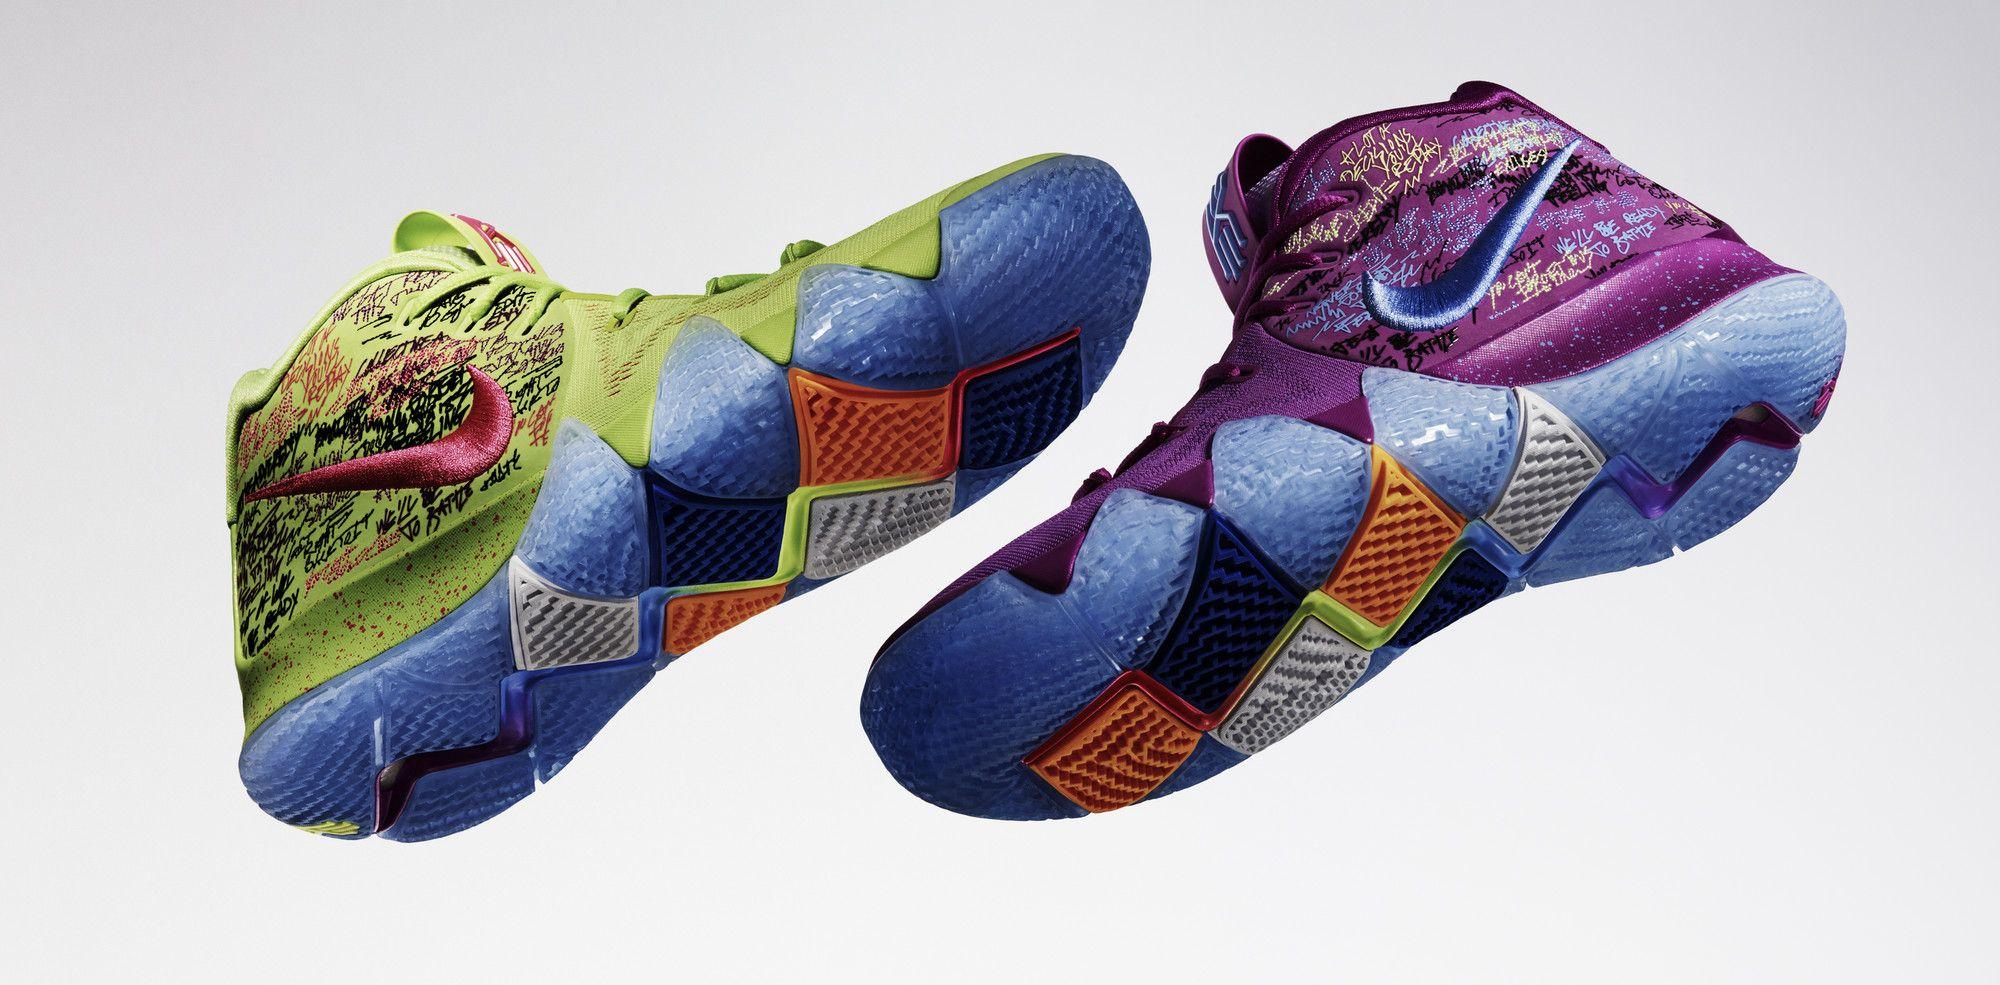 kyrie 4 shoe, Nike Basketball Shoes Online Sale. New Lebron shoes